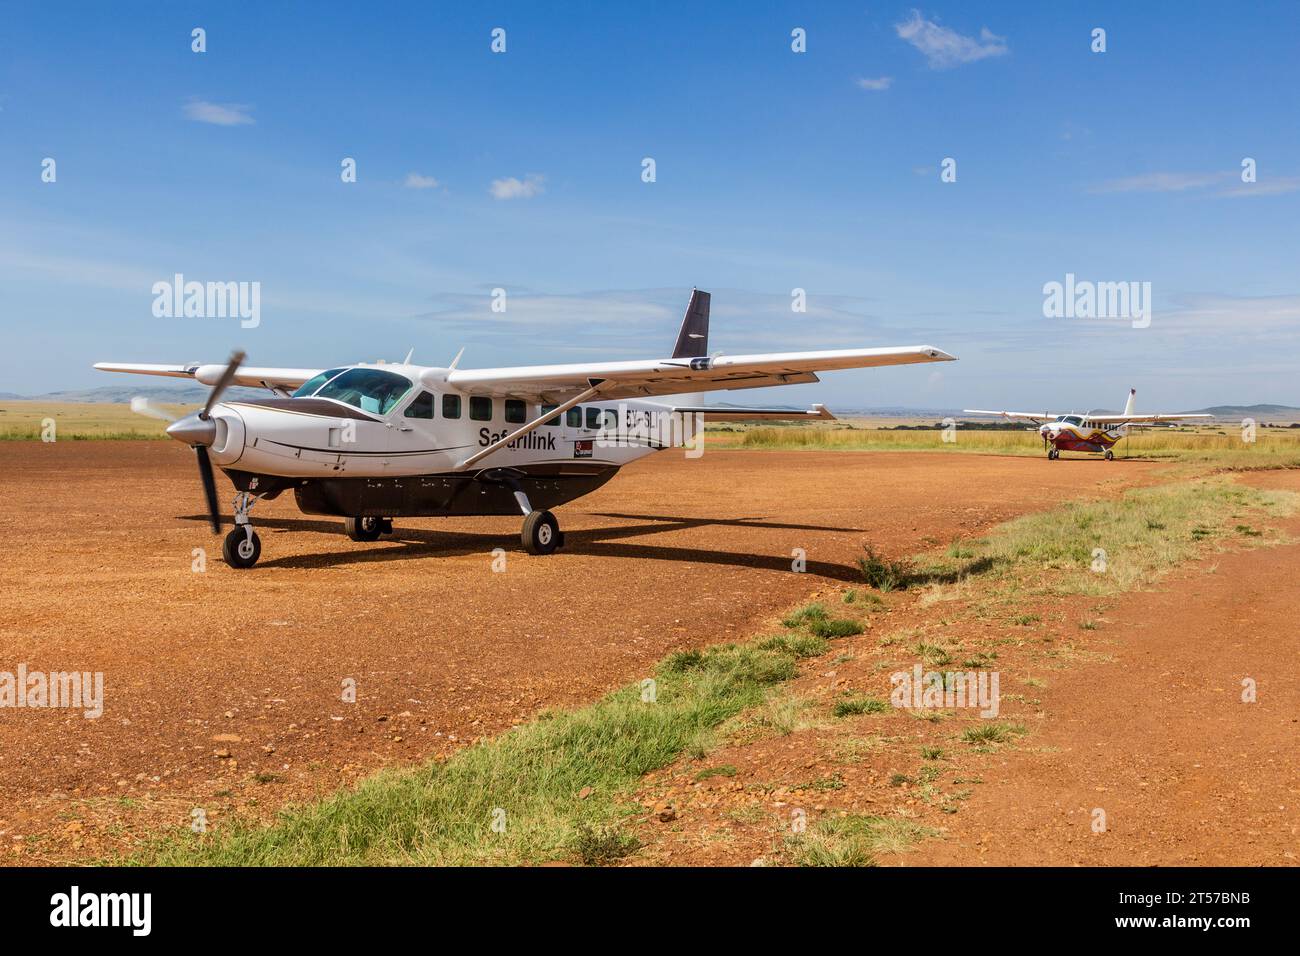 MASAI MARA, KENYA - FEBRUARY 19, 2020: Airplanes at the Keekorok airstrip in Masai Mara National Reserve, Kenya Stock Photo